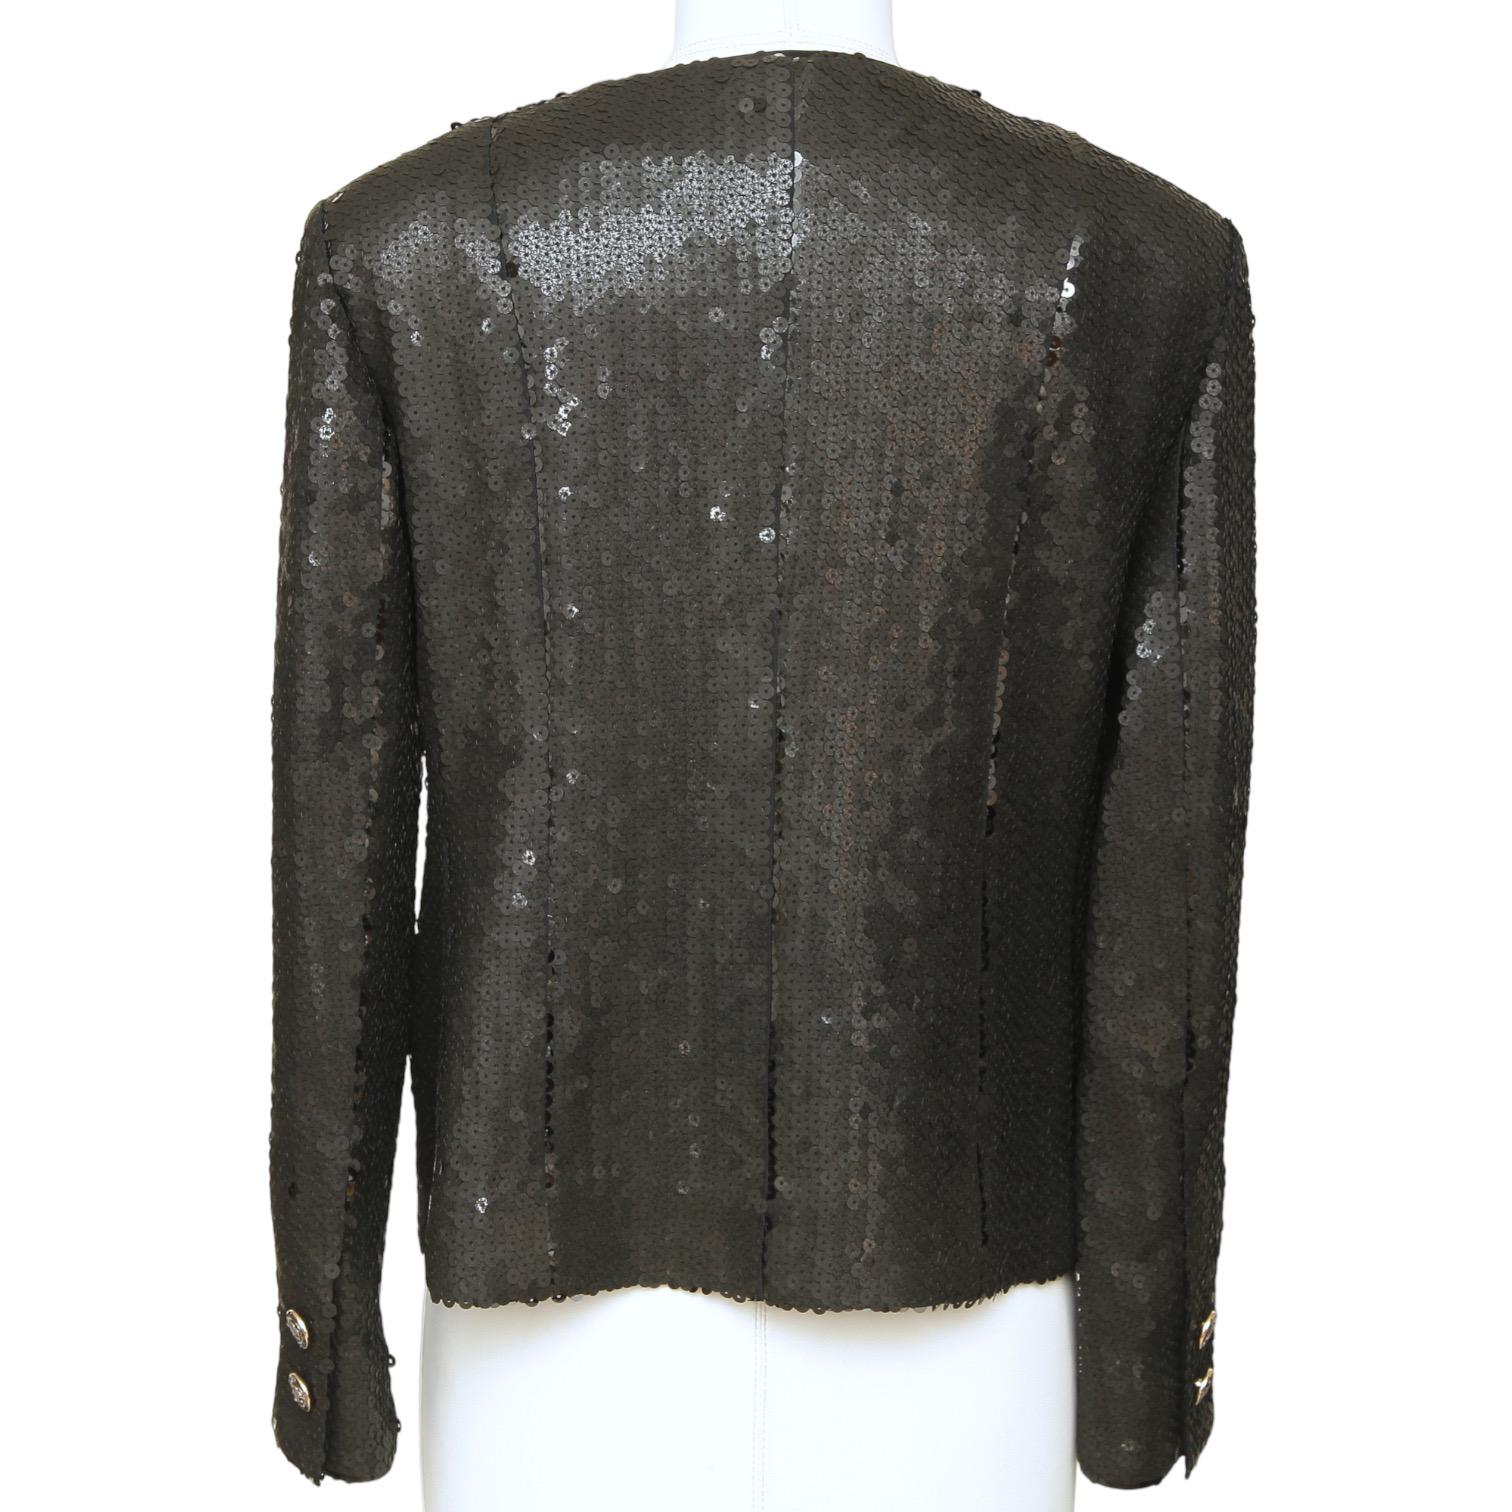 Women's CHANEL Black Sequin Jacket CRUISE 2023 Paillette Long Sleeve Sz 38 $8800 NWT